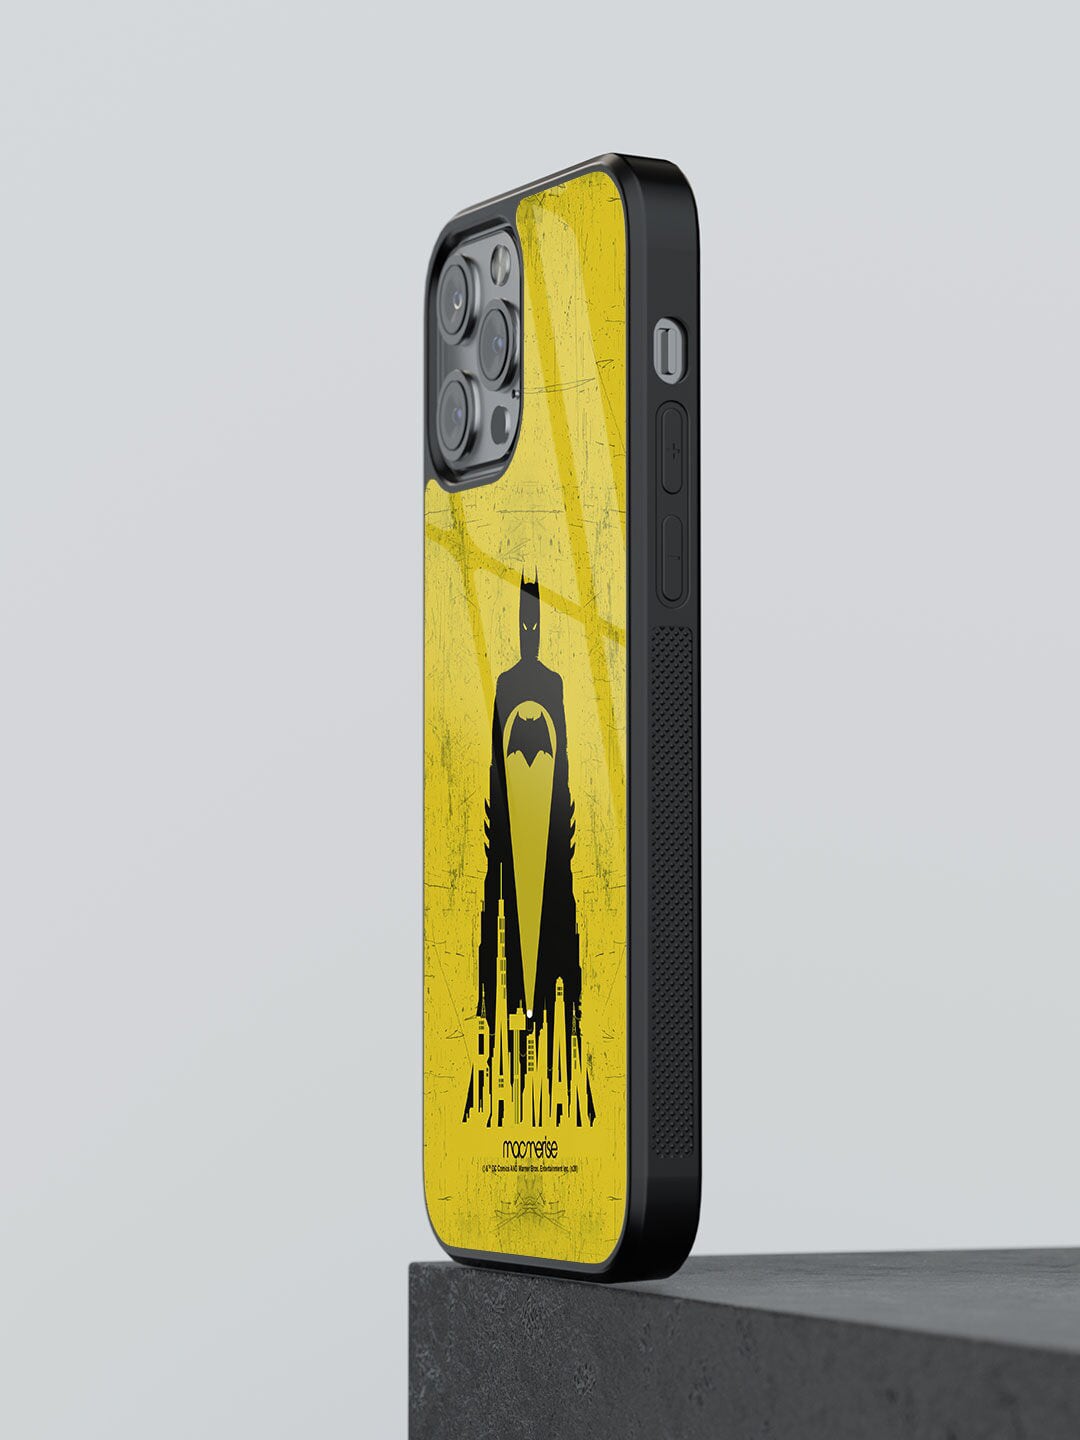 macmerise Yellow & Black Printed iPhone 12 Pro Phone Cases Price in India